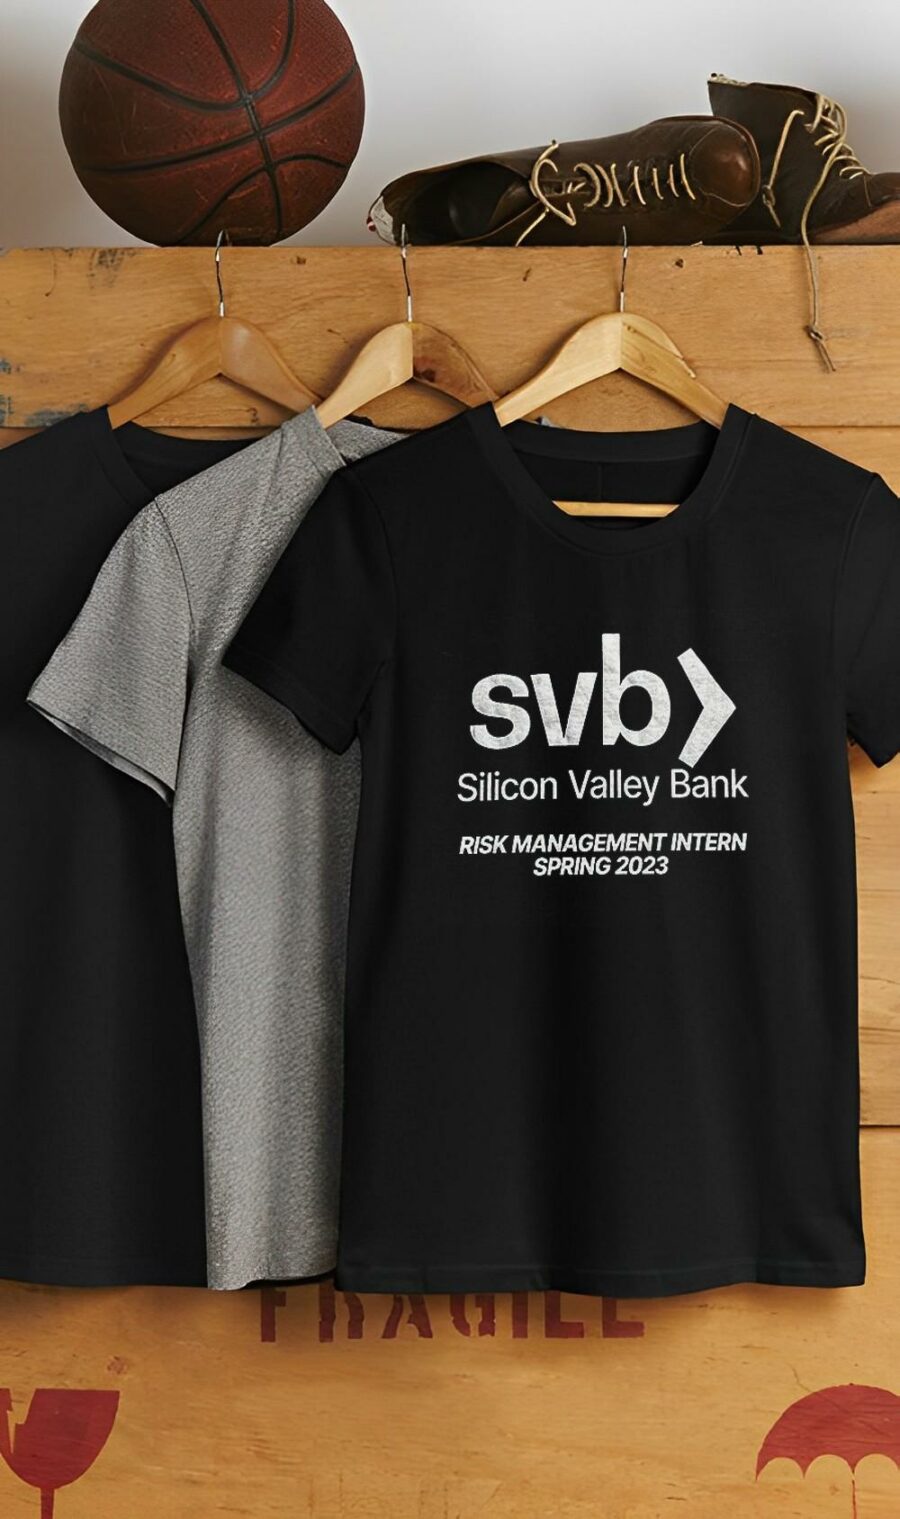 svb silicon valley bank risk management internship spring 2023 shirt